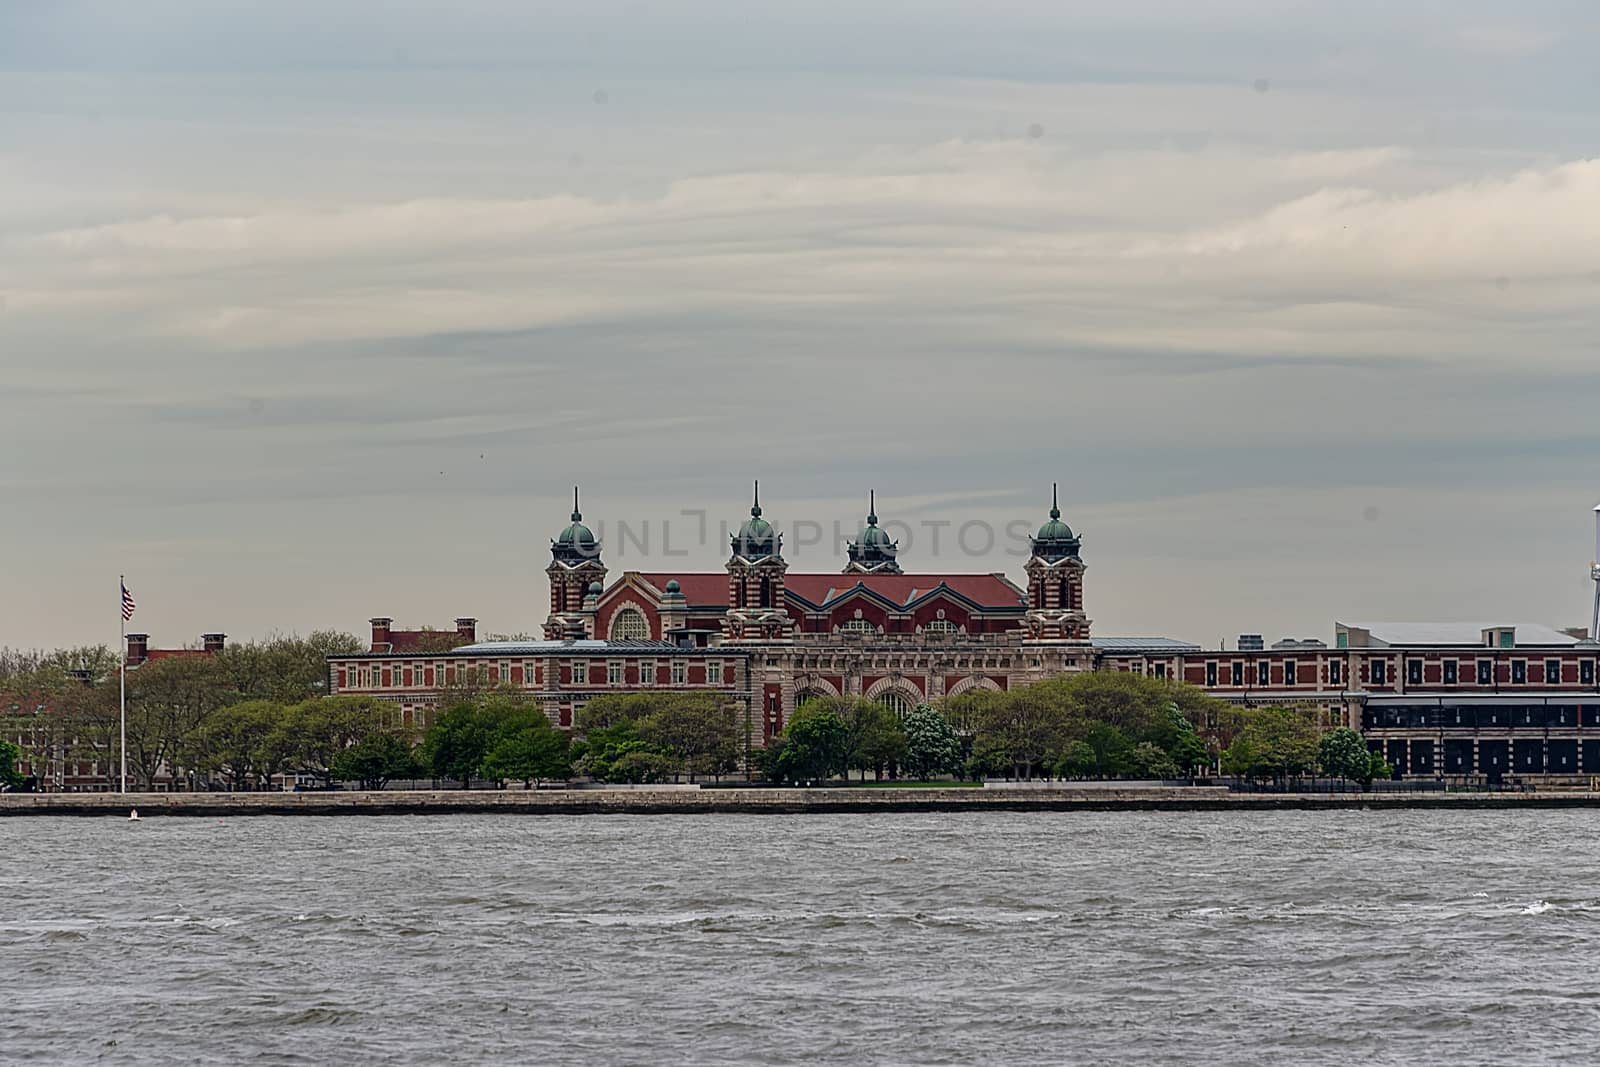 USA, New York - May 2019: Ellis Island